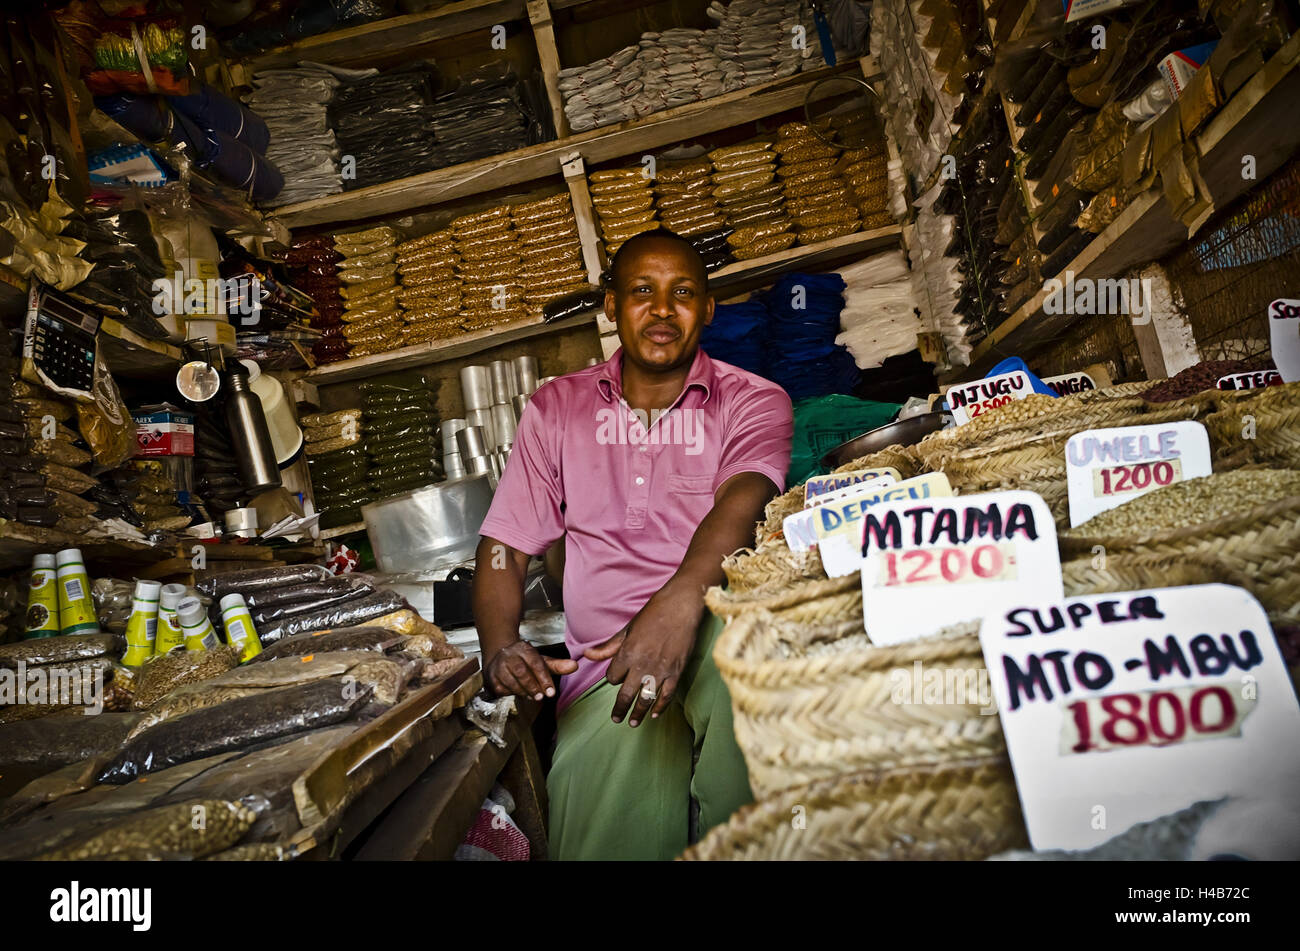 Africa, Tanzania, East Africa, Arusha, market, market stall, Stock Photo